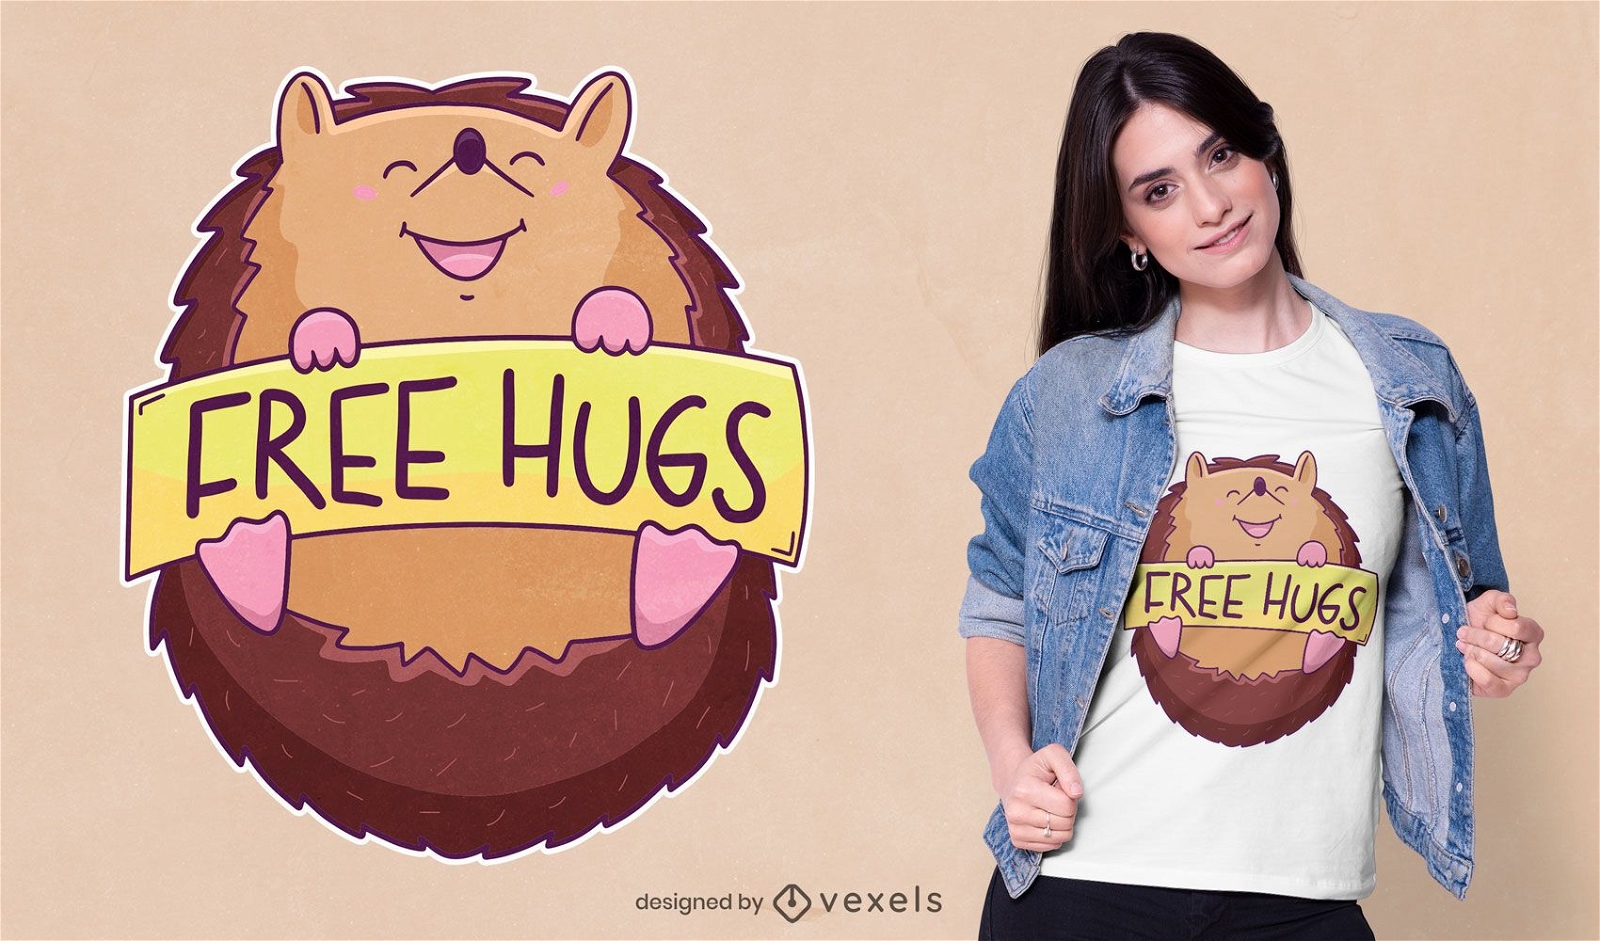 Free hugs t-shirt design